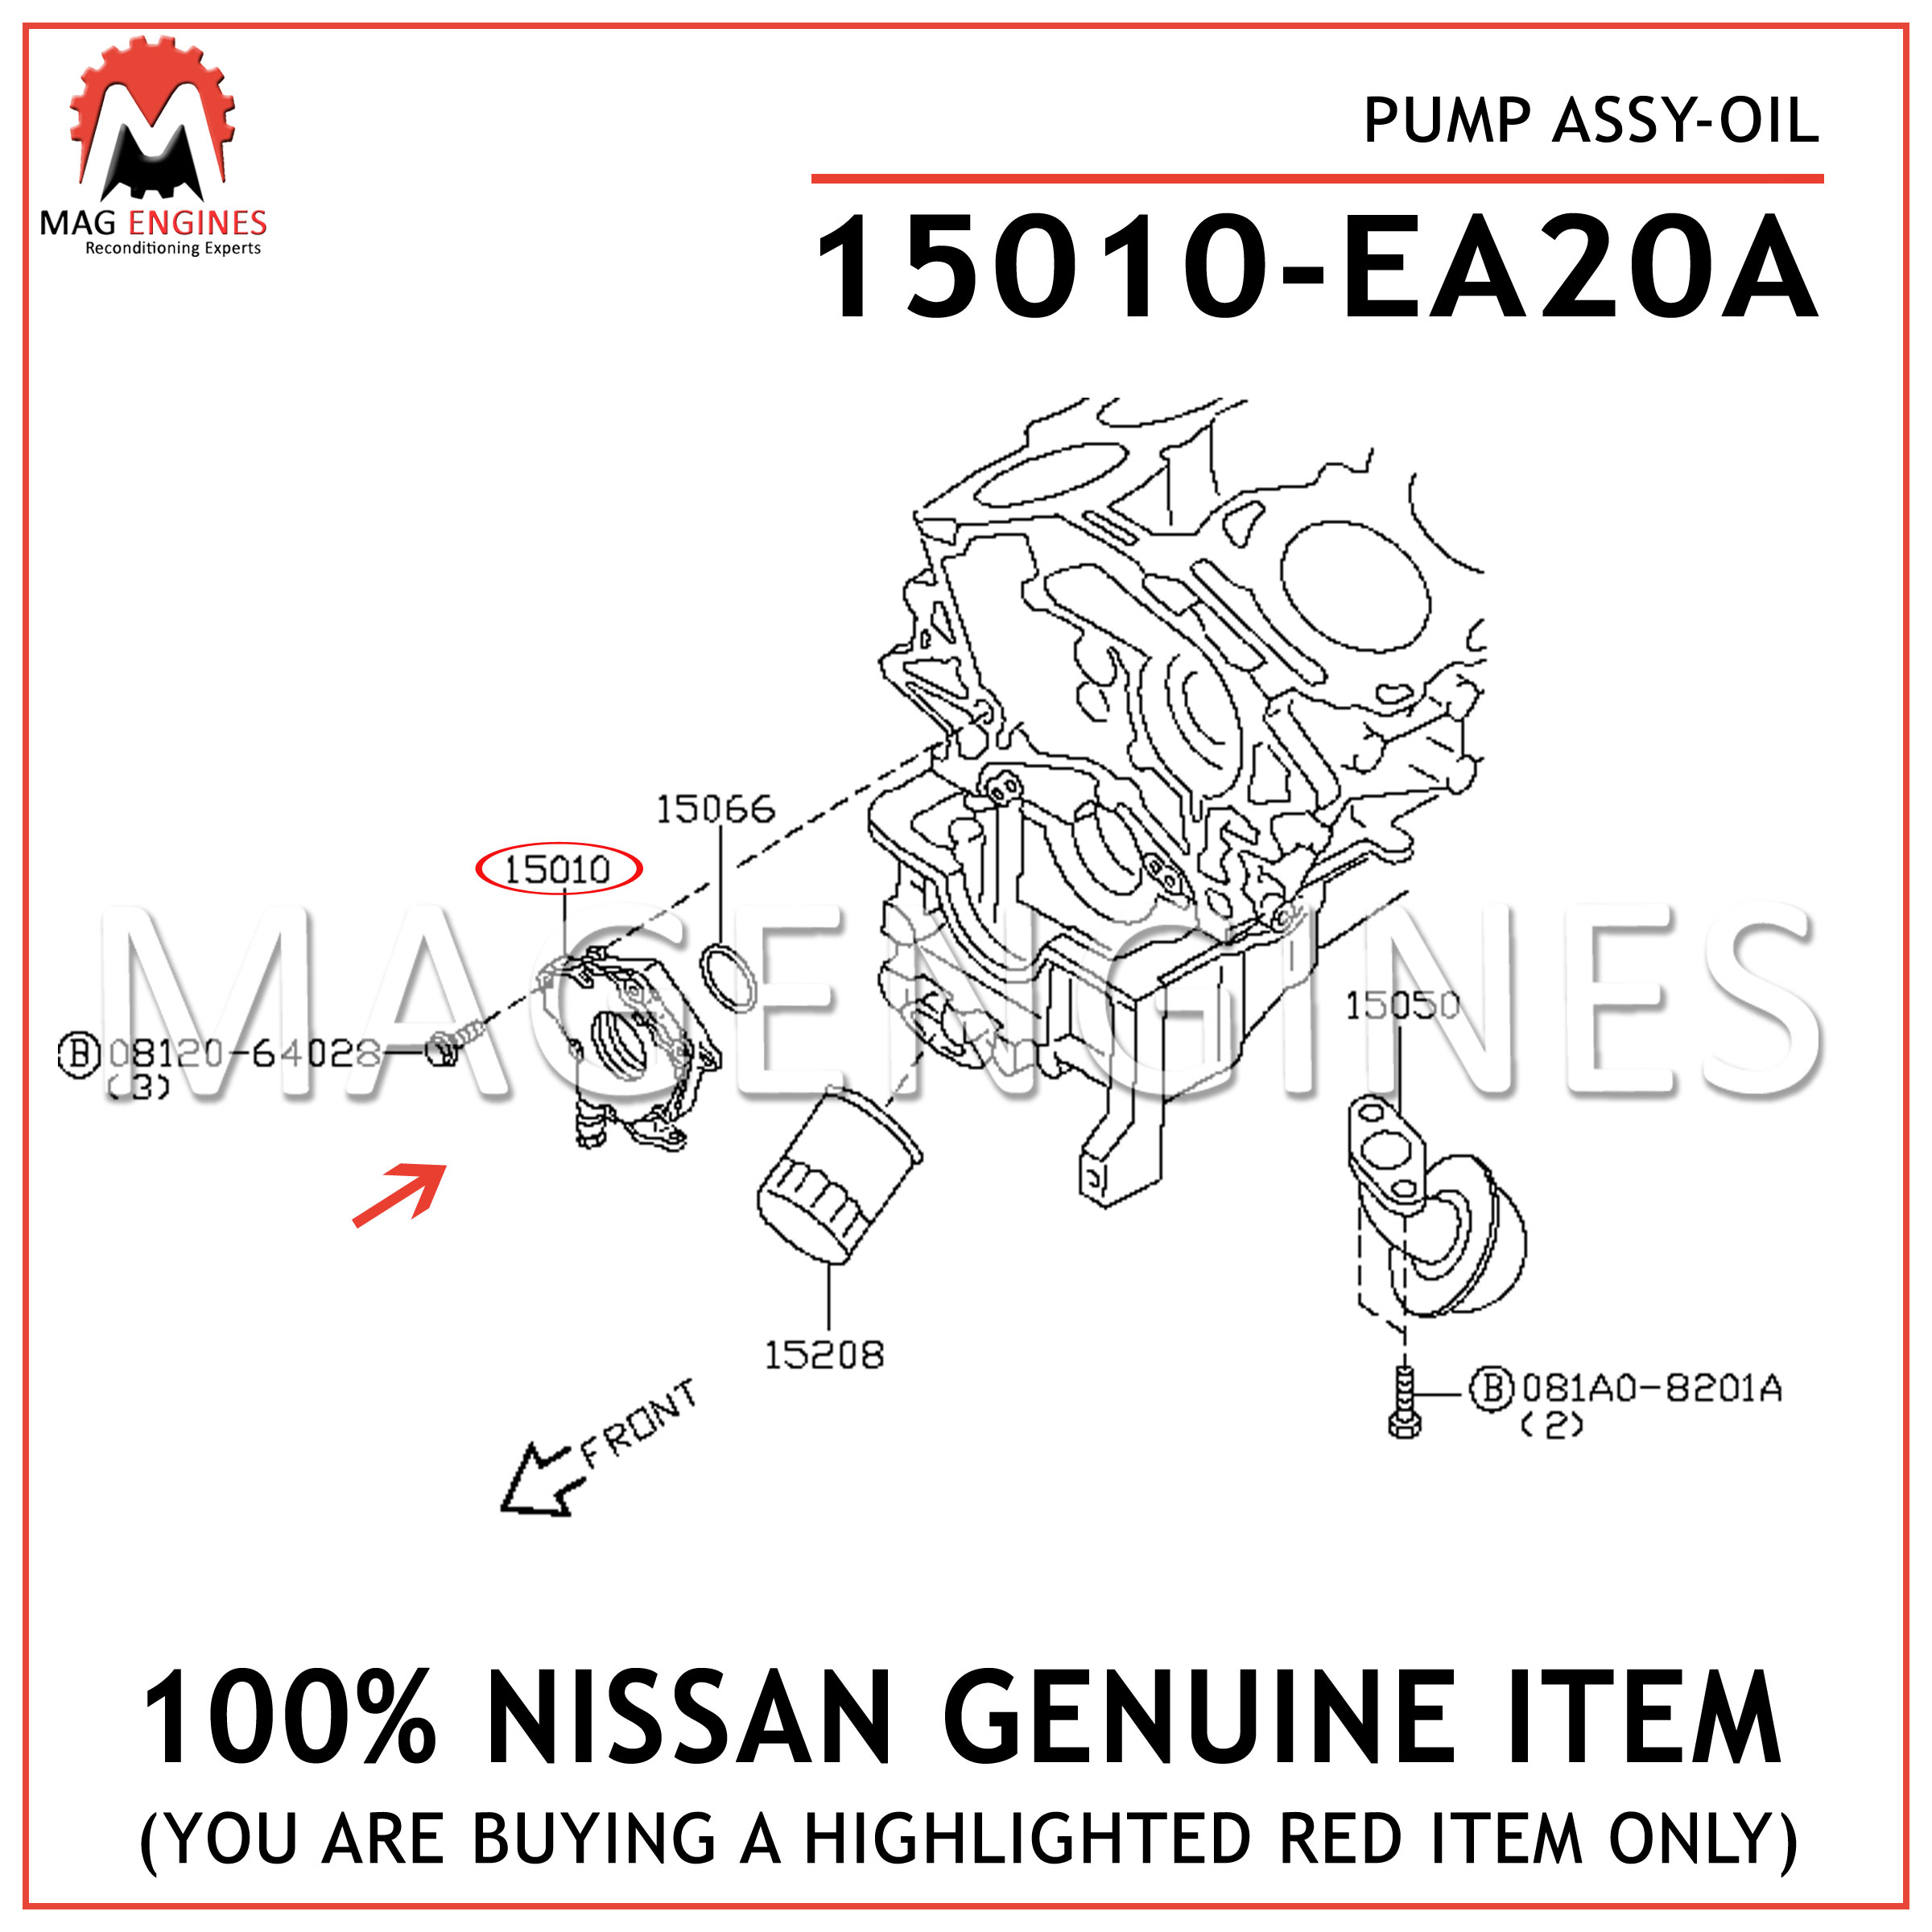 15010EB70A Genuine Nissan PUMP ASSY-OIL 15010-EB70A